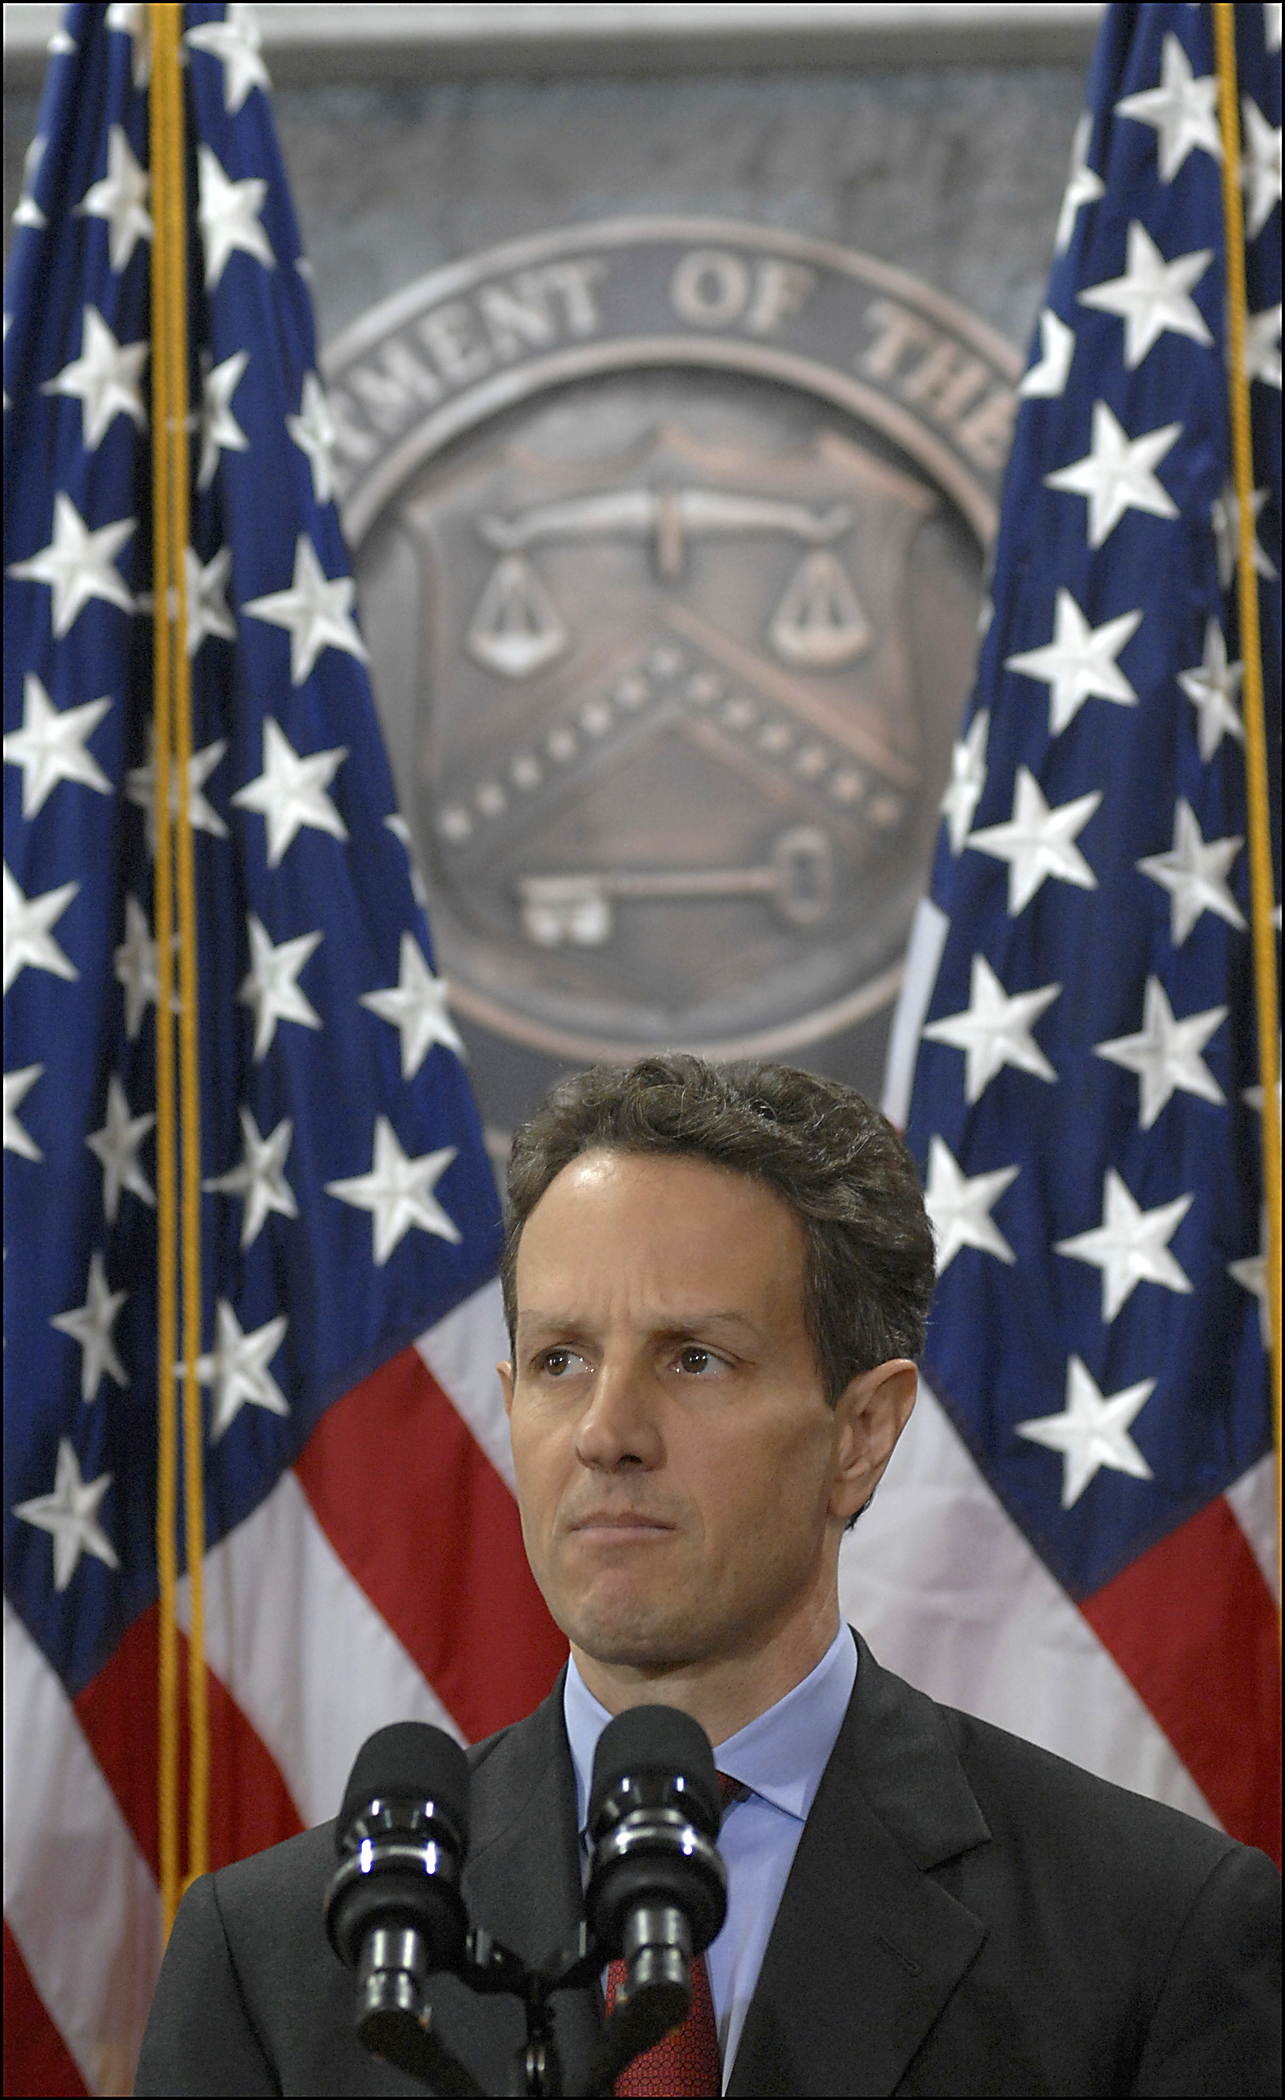 Treasury Secretary Geithner announces the Financial Stability Plan